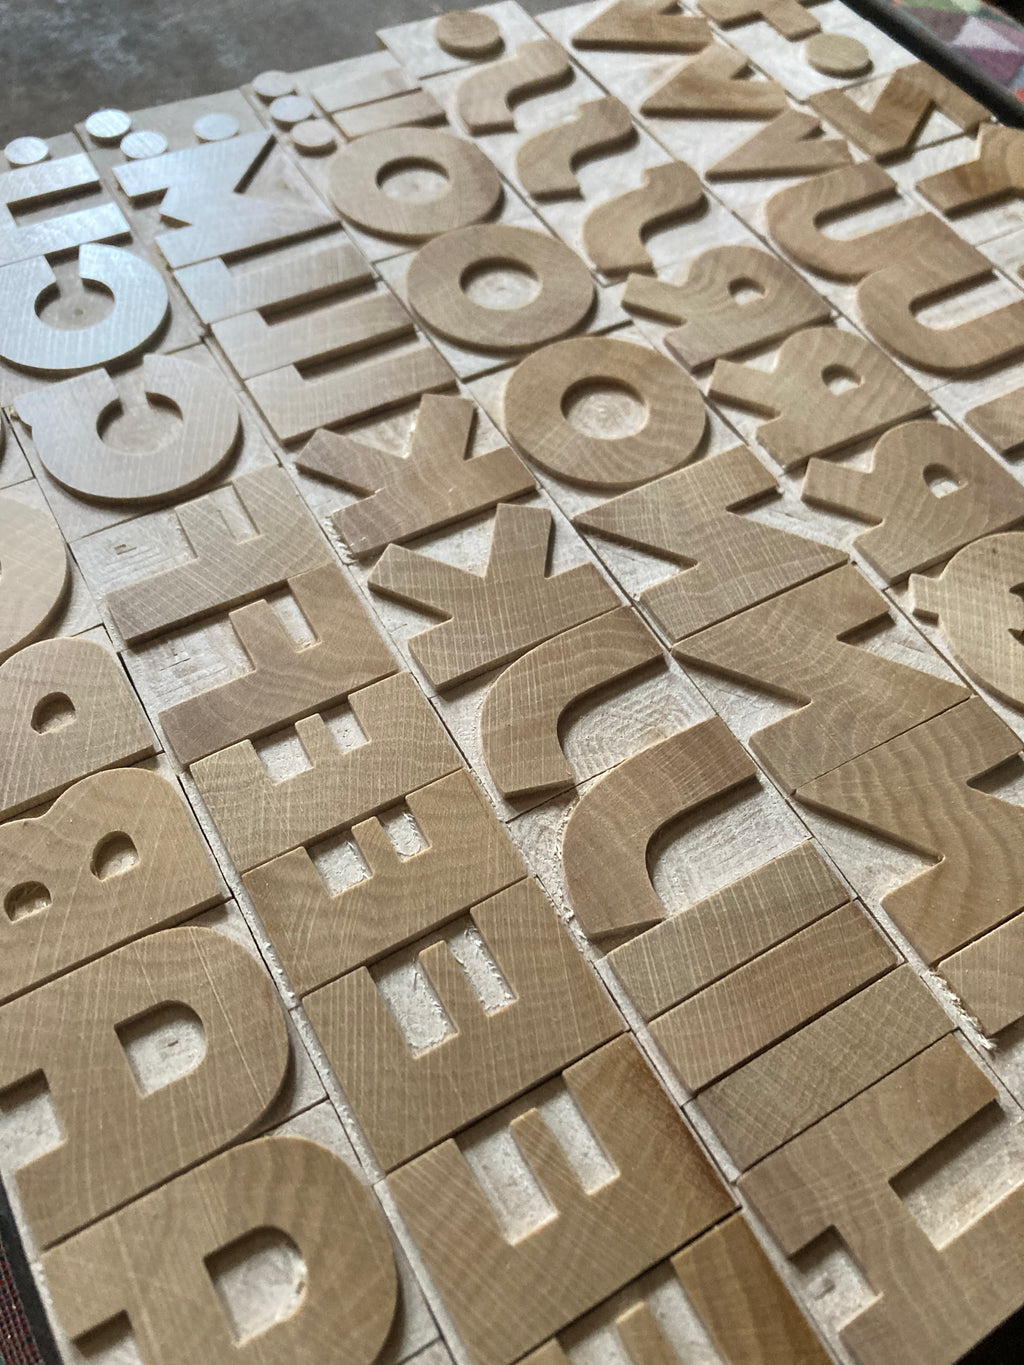 'Finn Moe Extra Bold' letterpress woodtype typeface